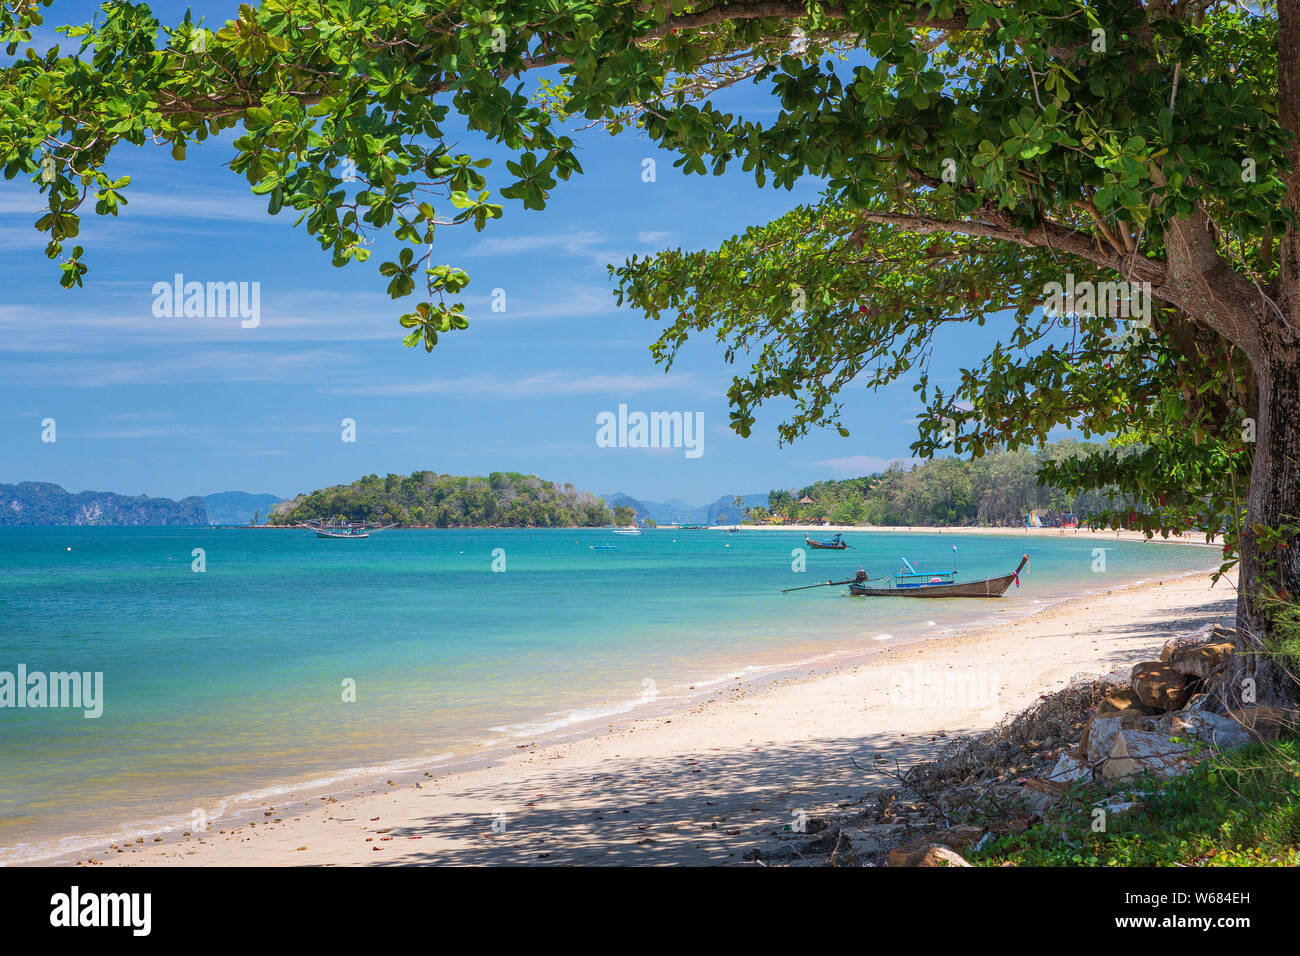 Klong Muang Beach in Krabi, Thailand Stock Photo